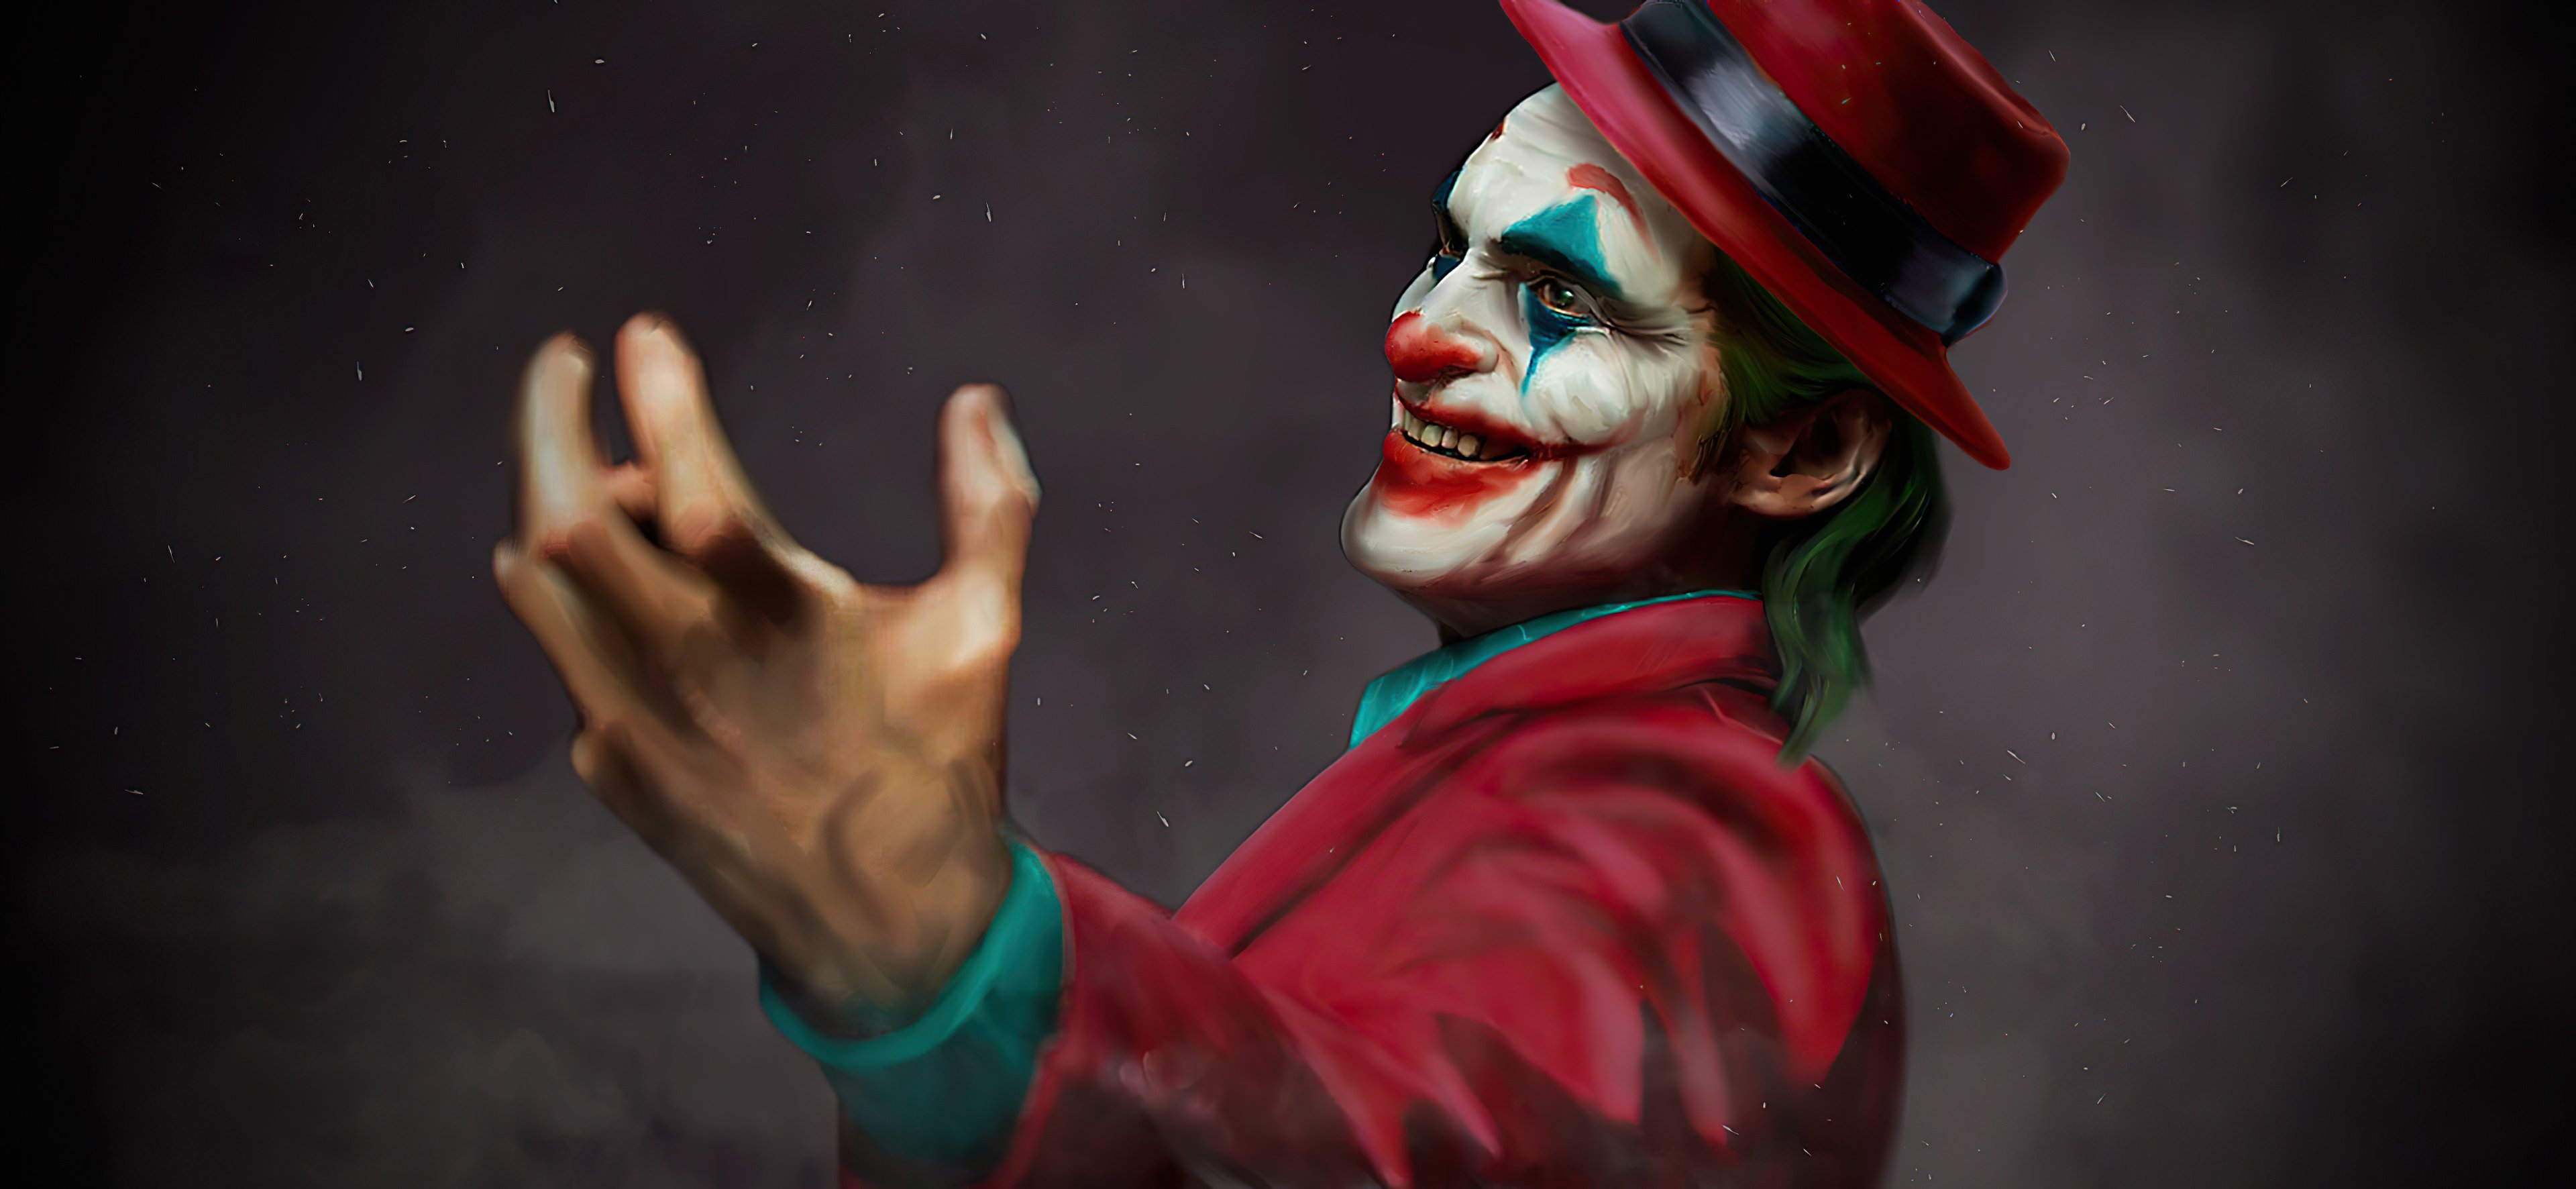 Wallpaper Joker with hat